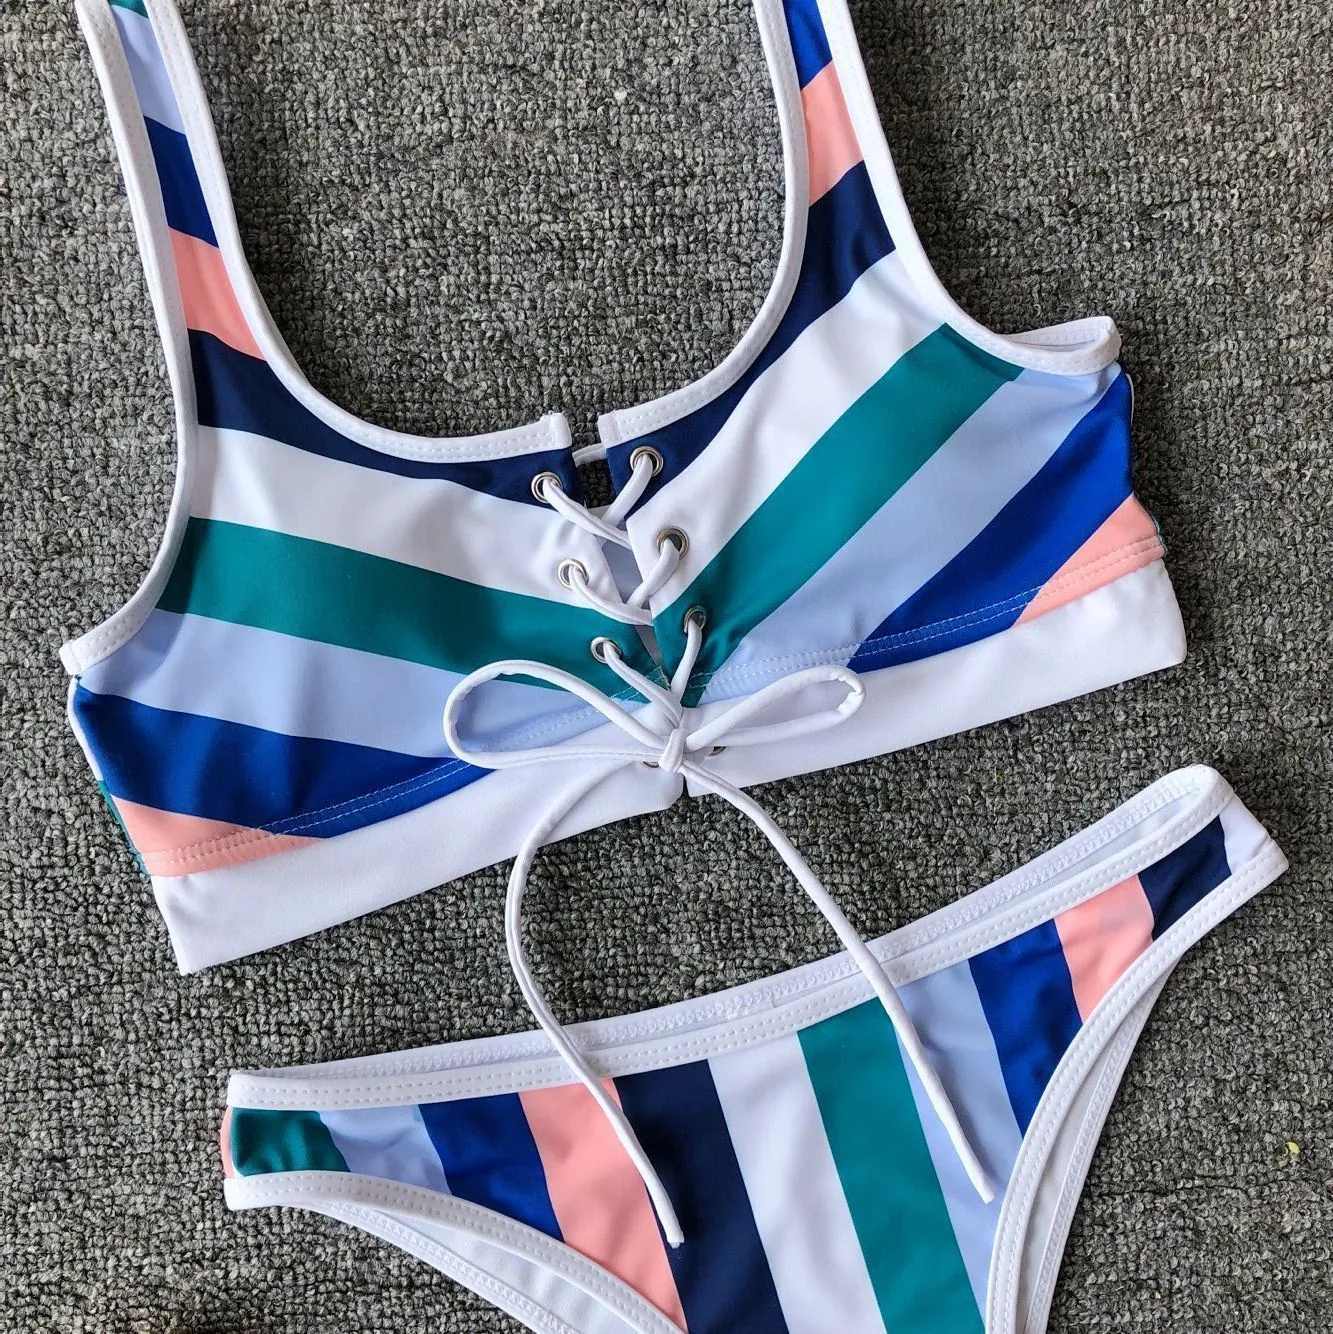 MJ-123 2019 New Bikini 세트 옐로우 밴드 수영복 섹시한 프린트 끈 비키니 여성 수영복 2 피스 바터 수영복 256w